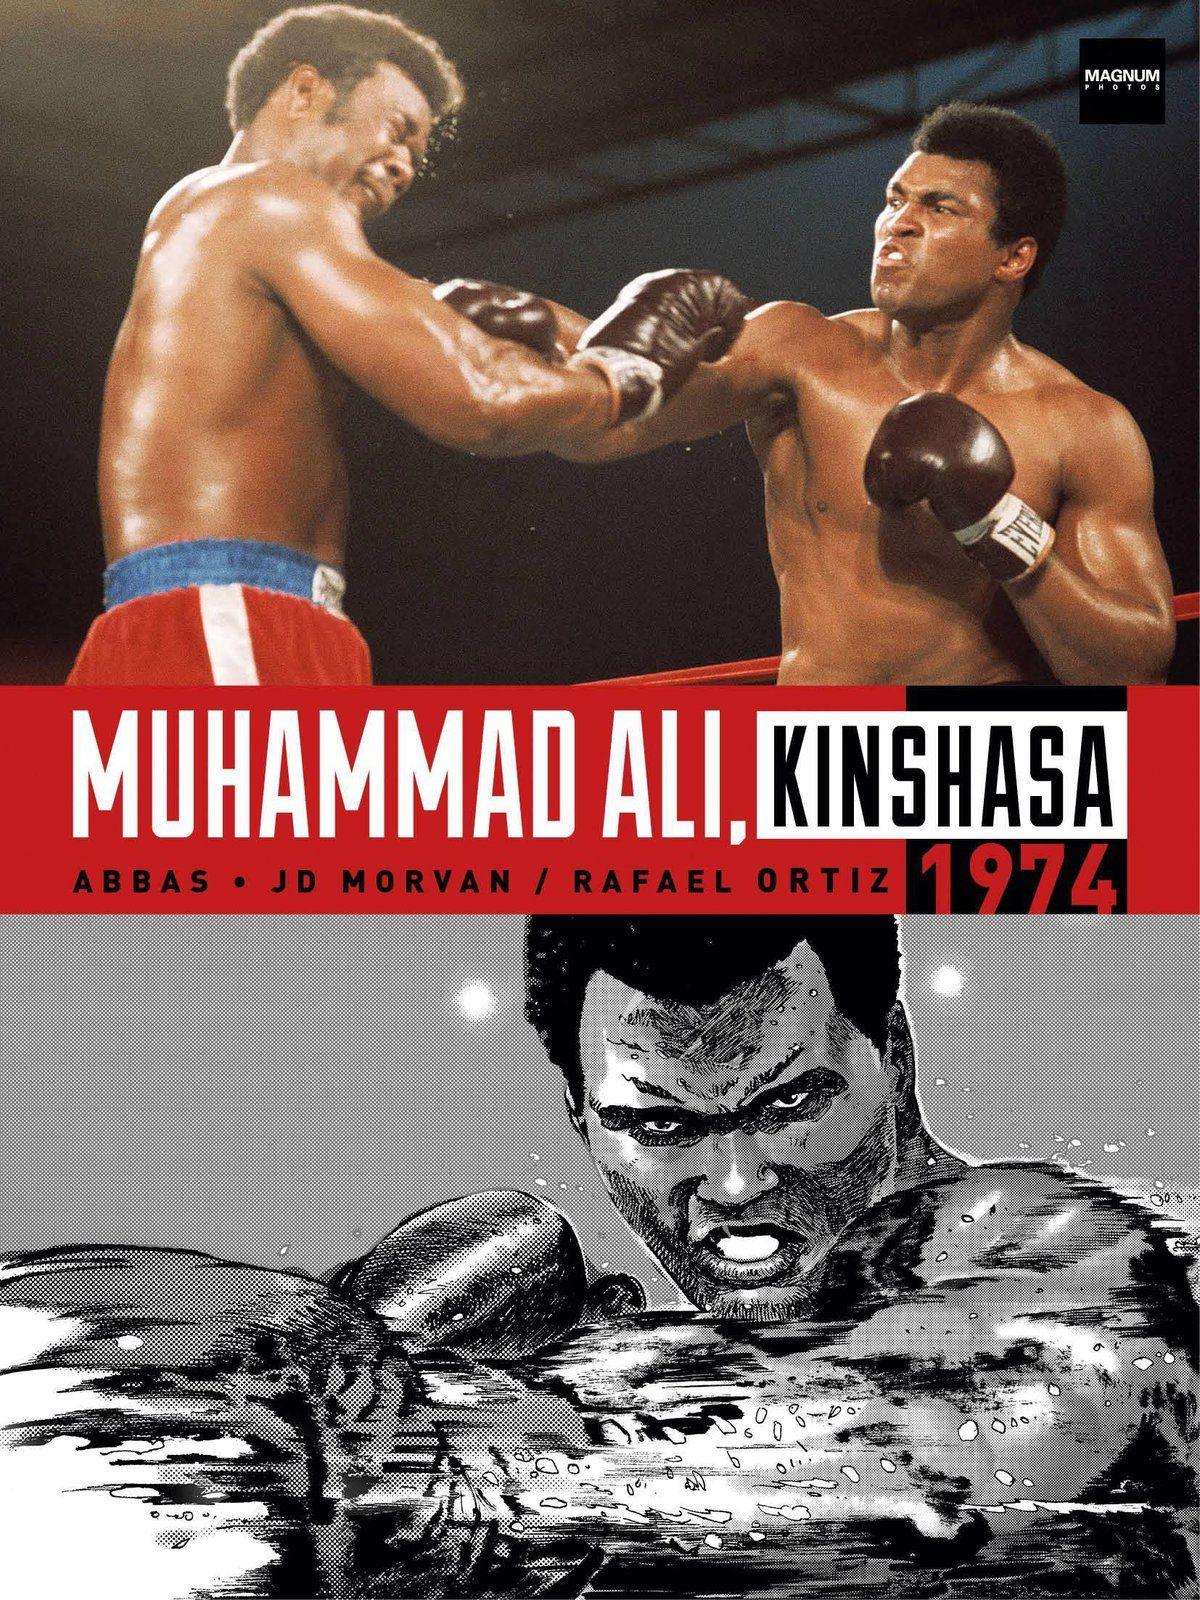 MUHAMMAD ALI KINSHASA 1974 HC (MR) (SHIPS 02-24-21) - PCKComics.com